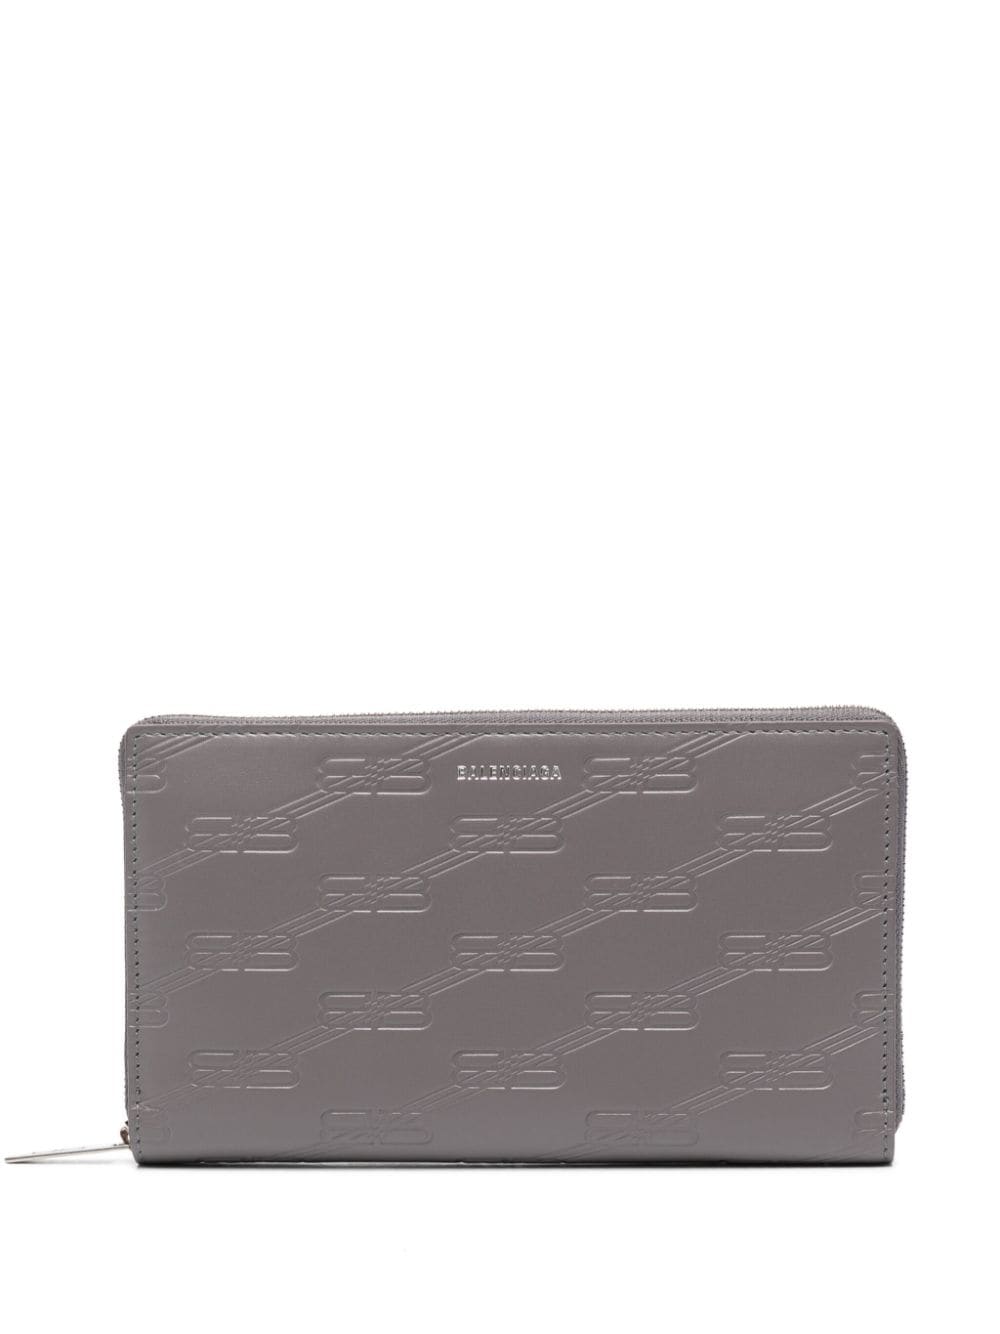 Image 1 of Balenciaga embossed-logo leather wallet